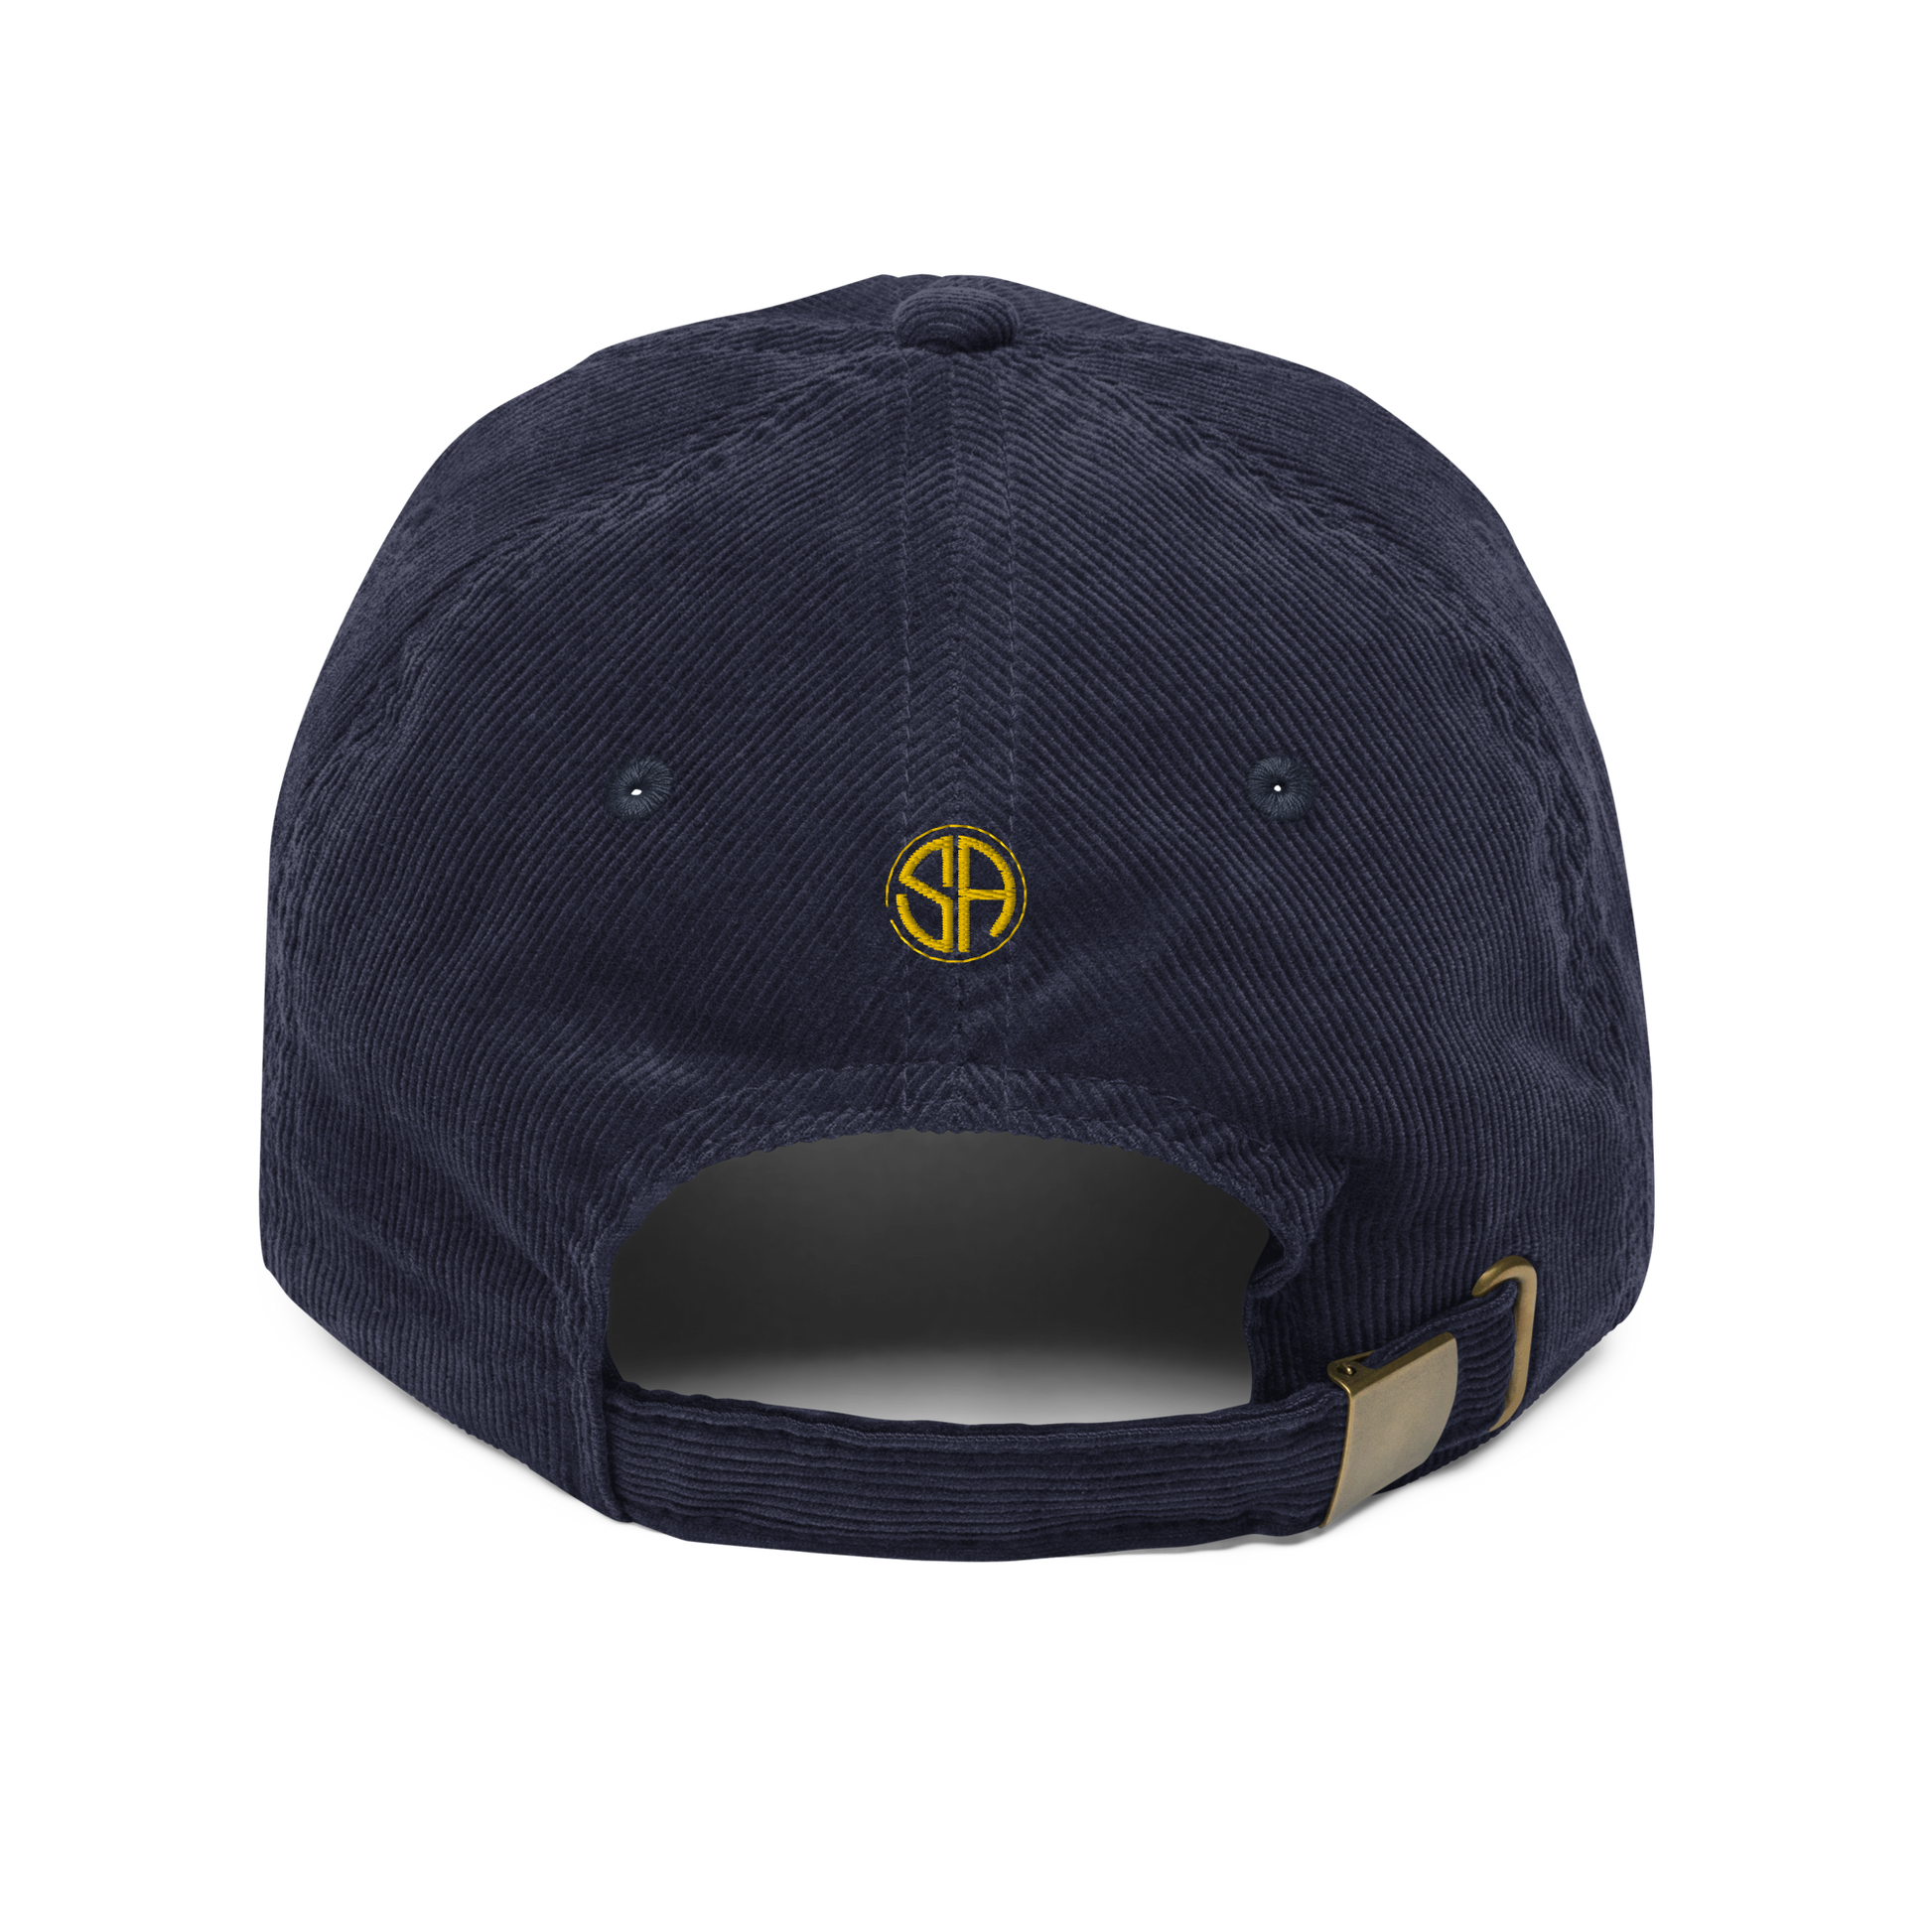 Home Field Advantage Custom Vintage Corduroy Baseball Hat navy gold